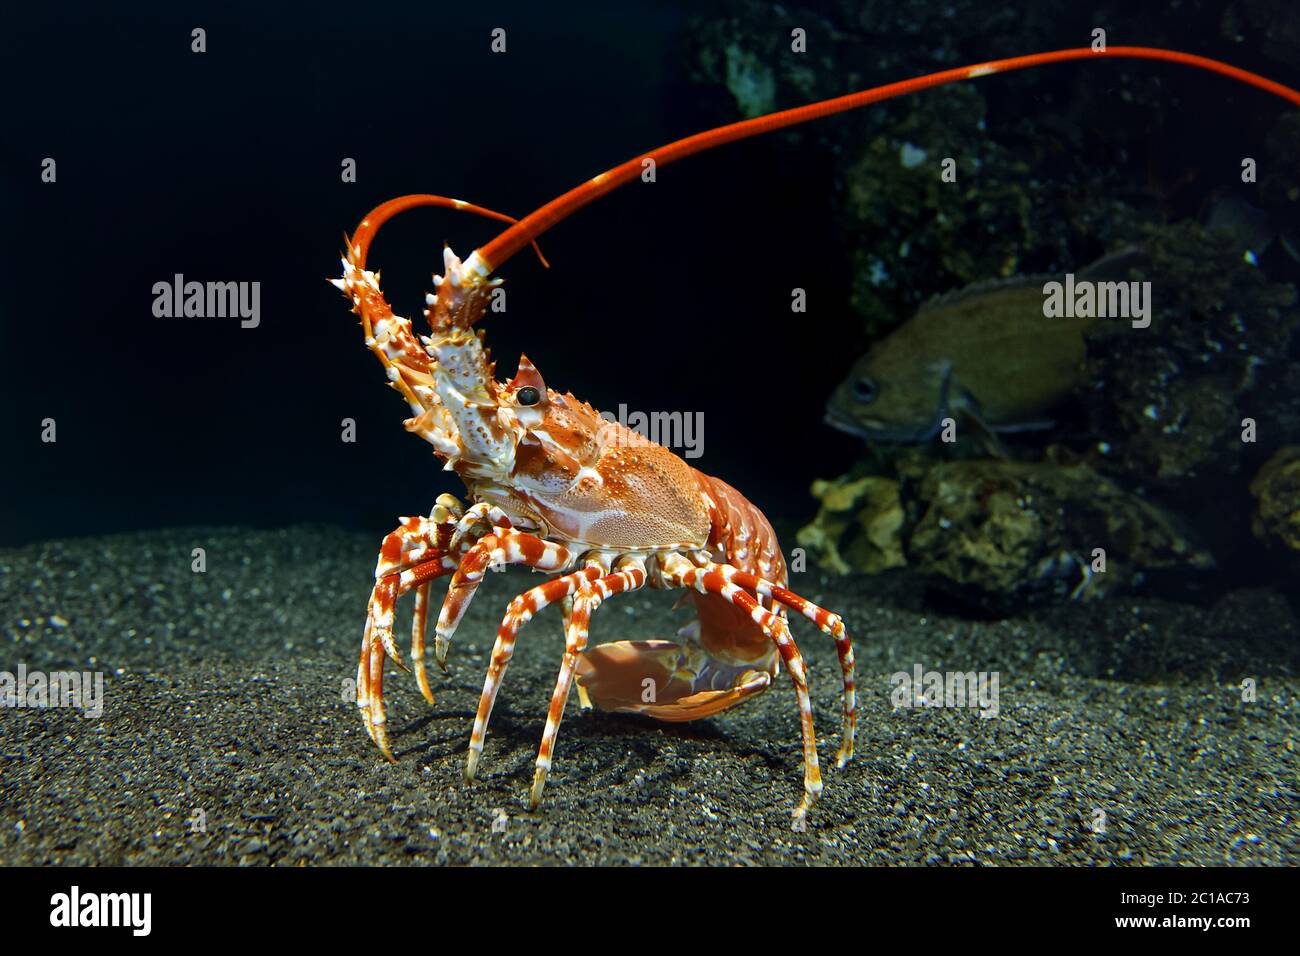 Southern spiny lobster - Palinurus gilchristi Stock Photo